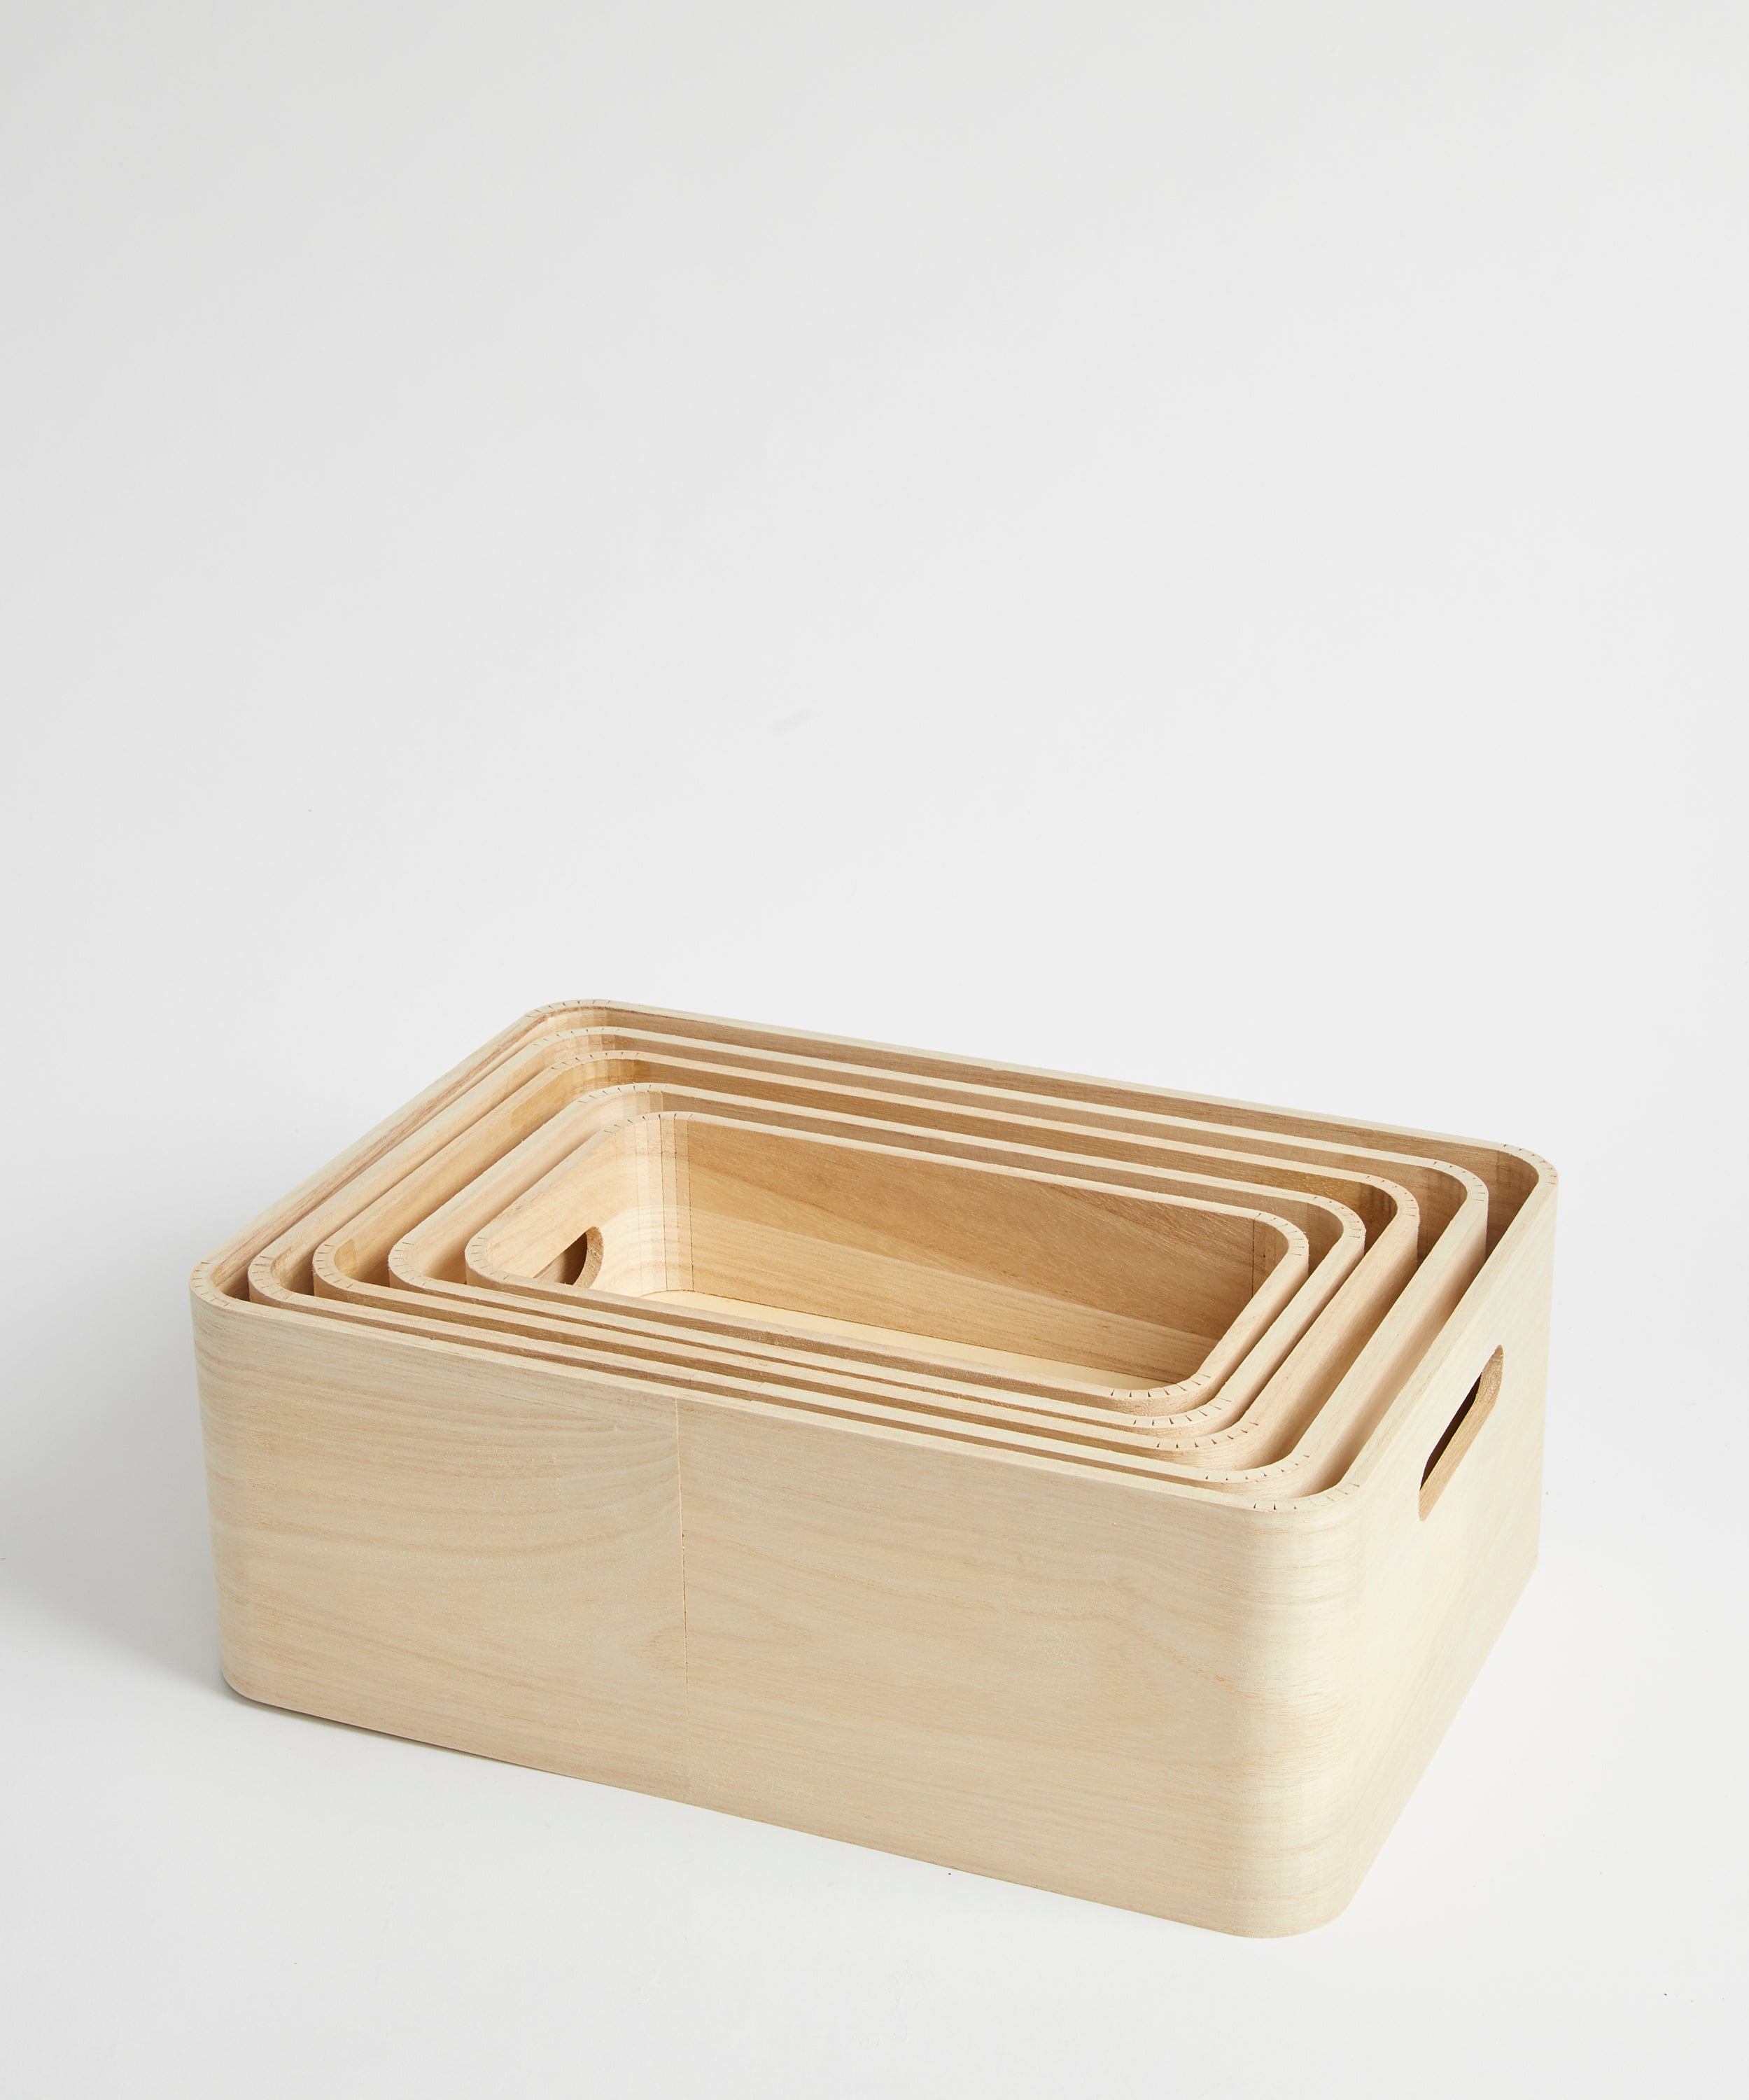 Storex Stackable Craft Box